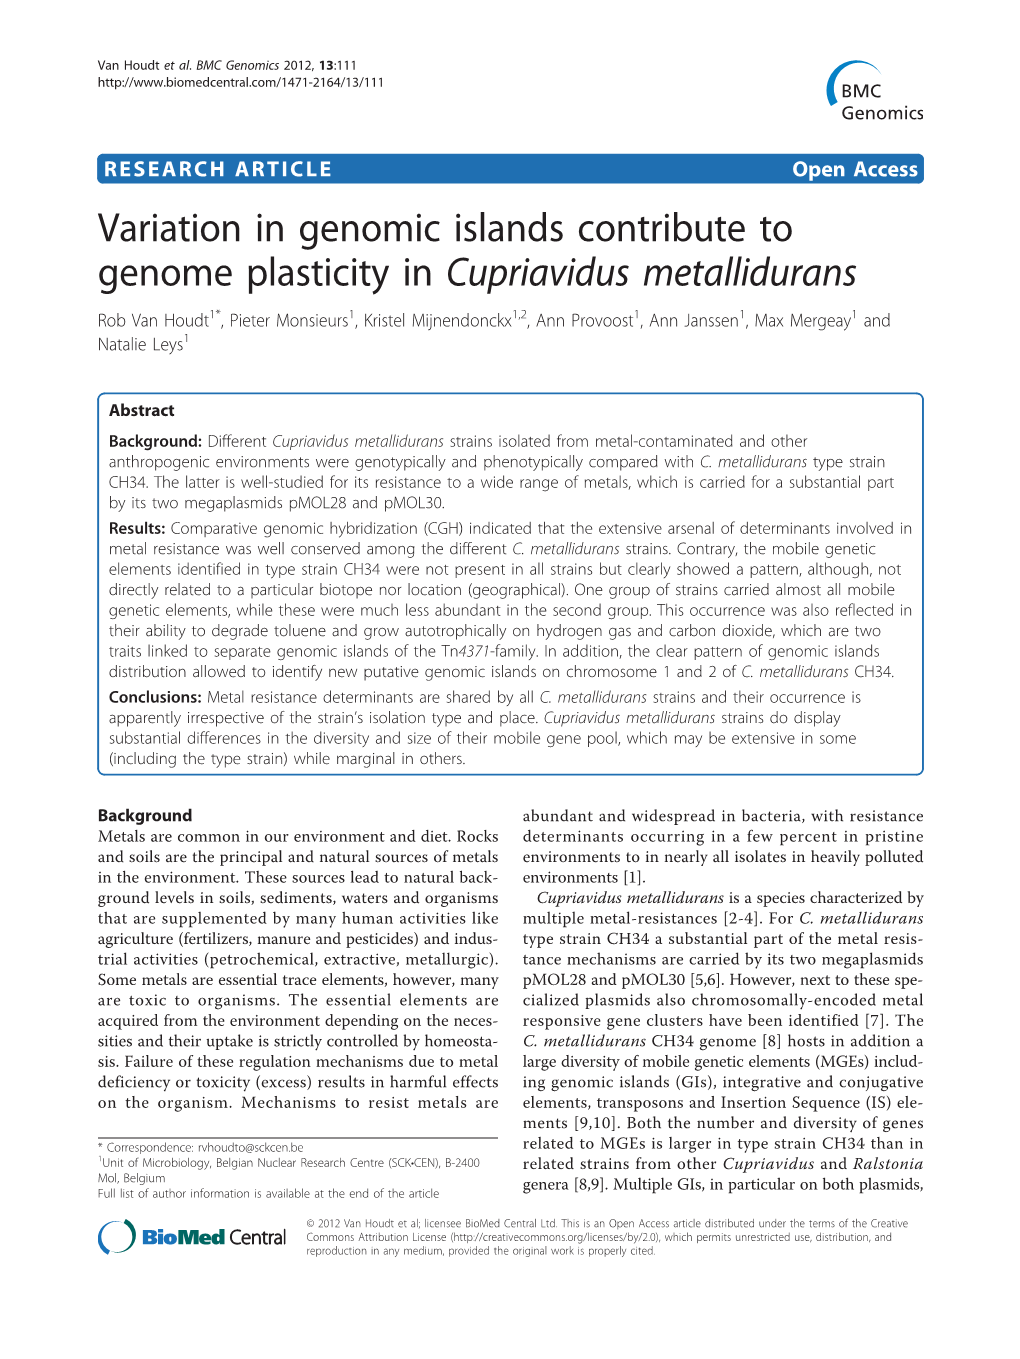 Variation in Genomic Islands Contribute to Genome Plasticity In